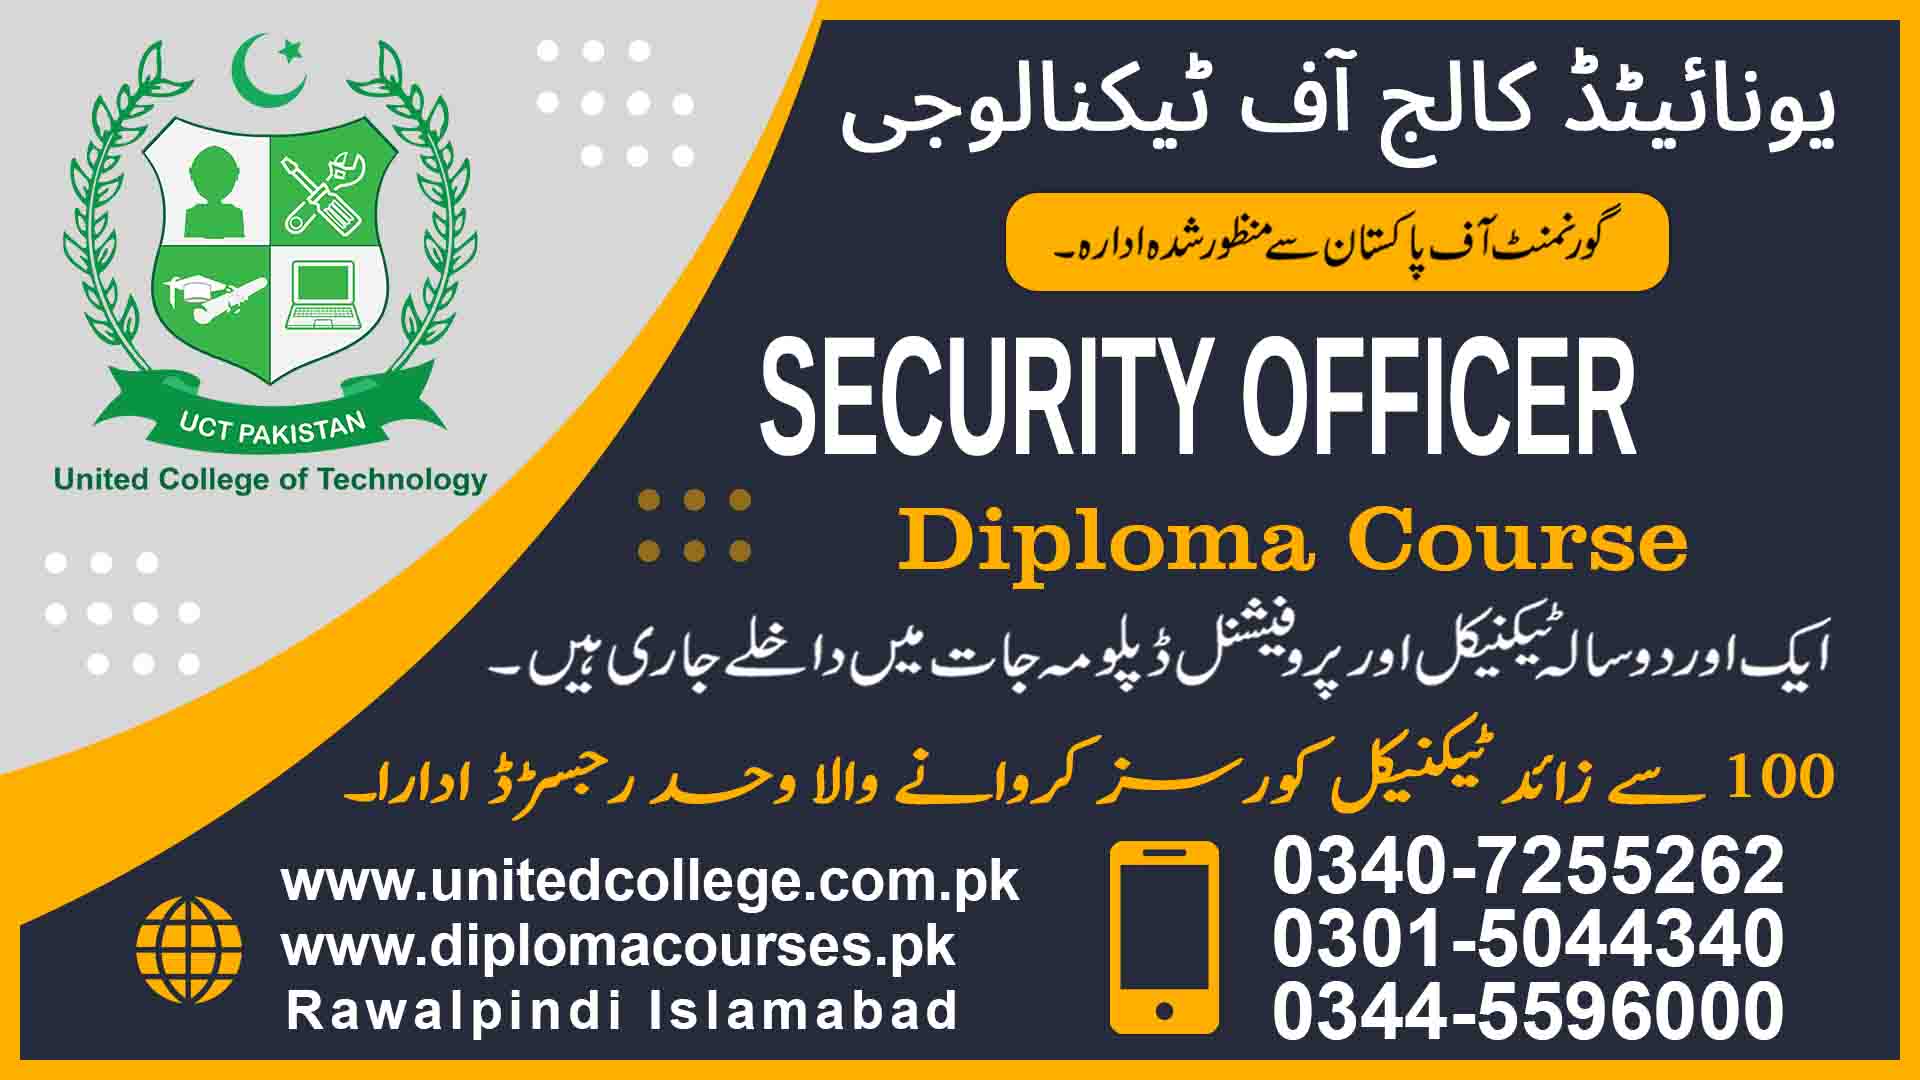 SECURITY OFFICER COURSE IN RAWALPINDI ISLAMABAD PAKISTAN